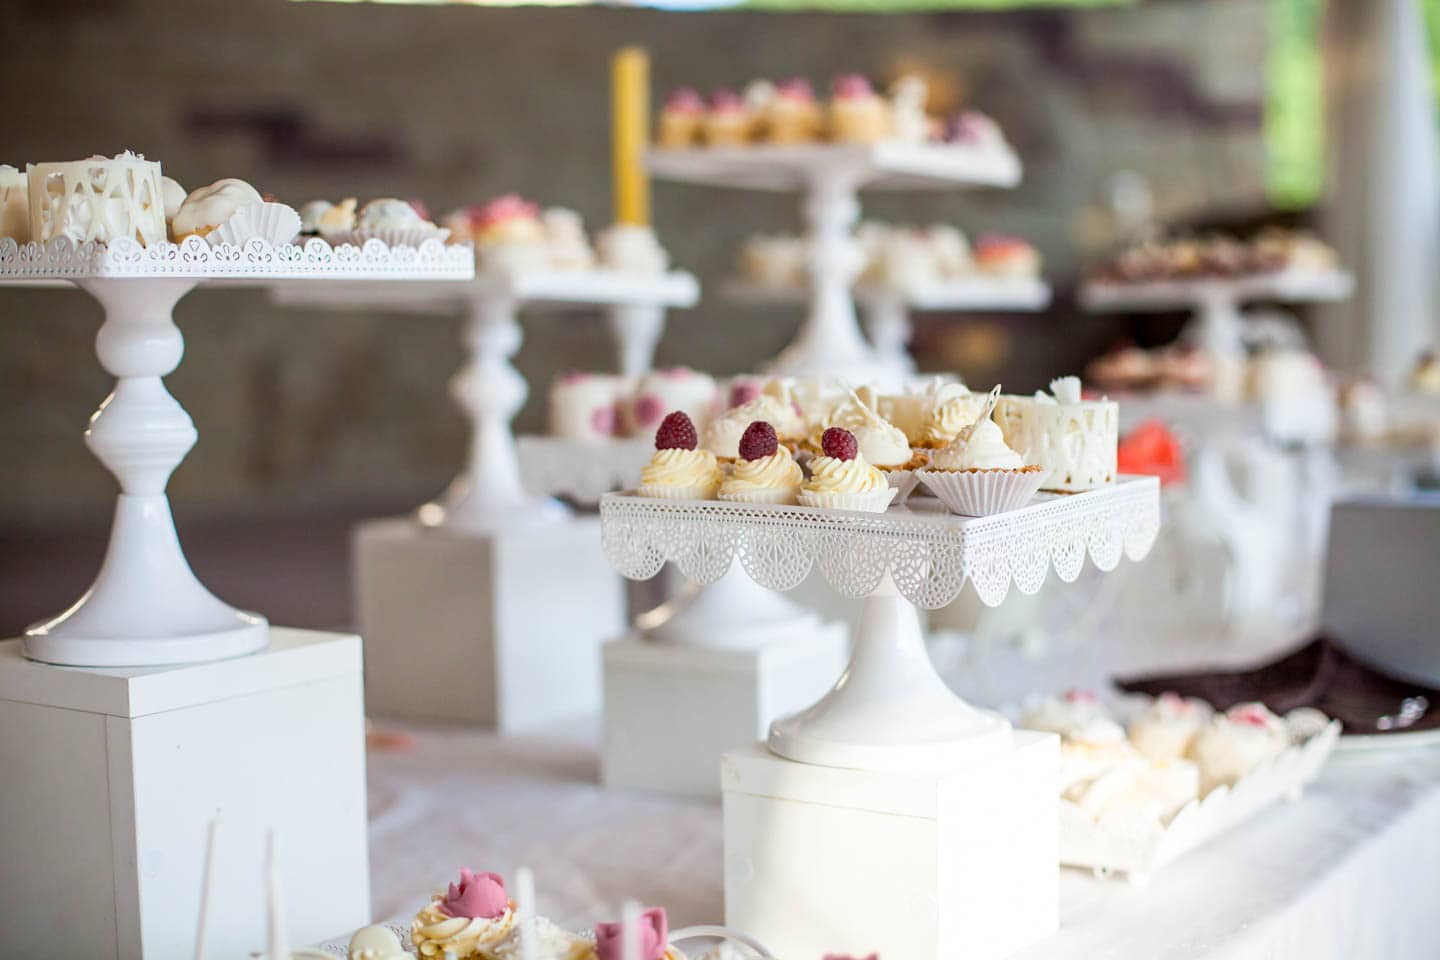 Winter wonderland dessert table with white cake stands